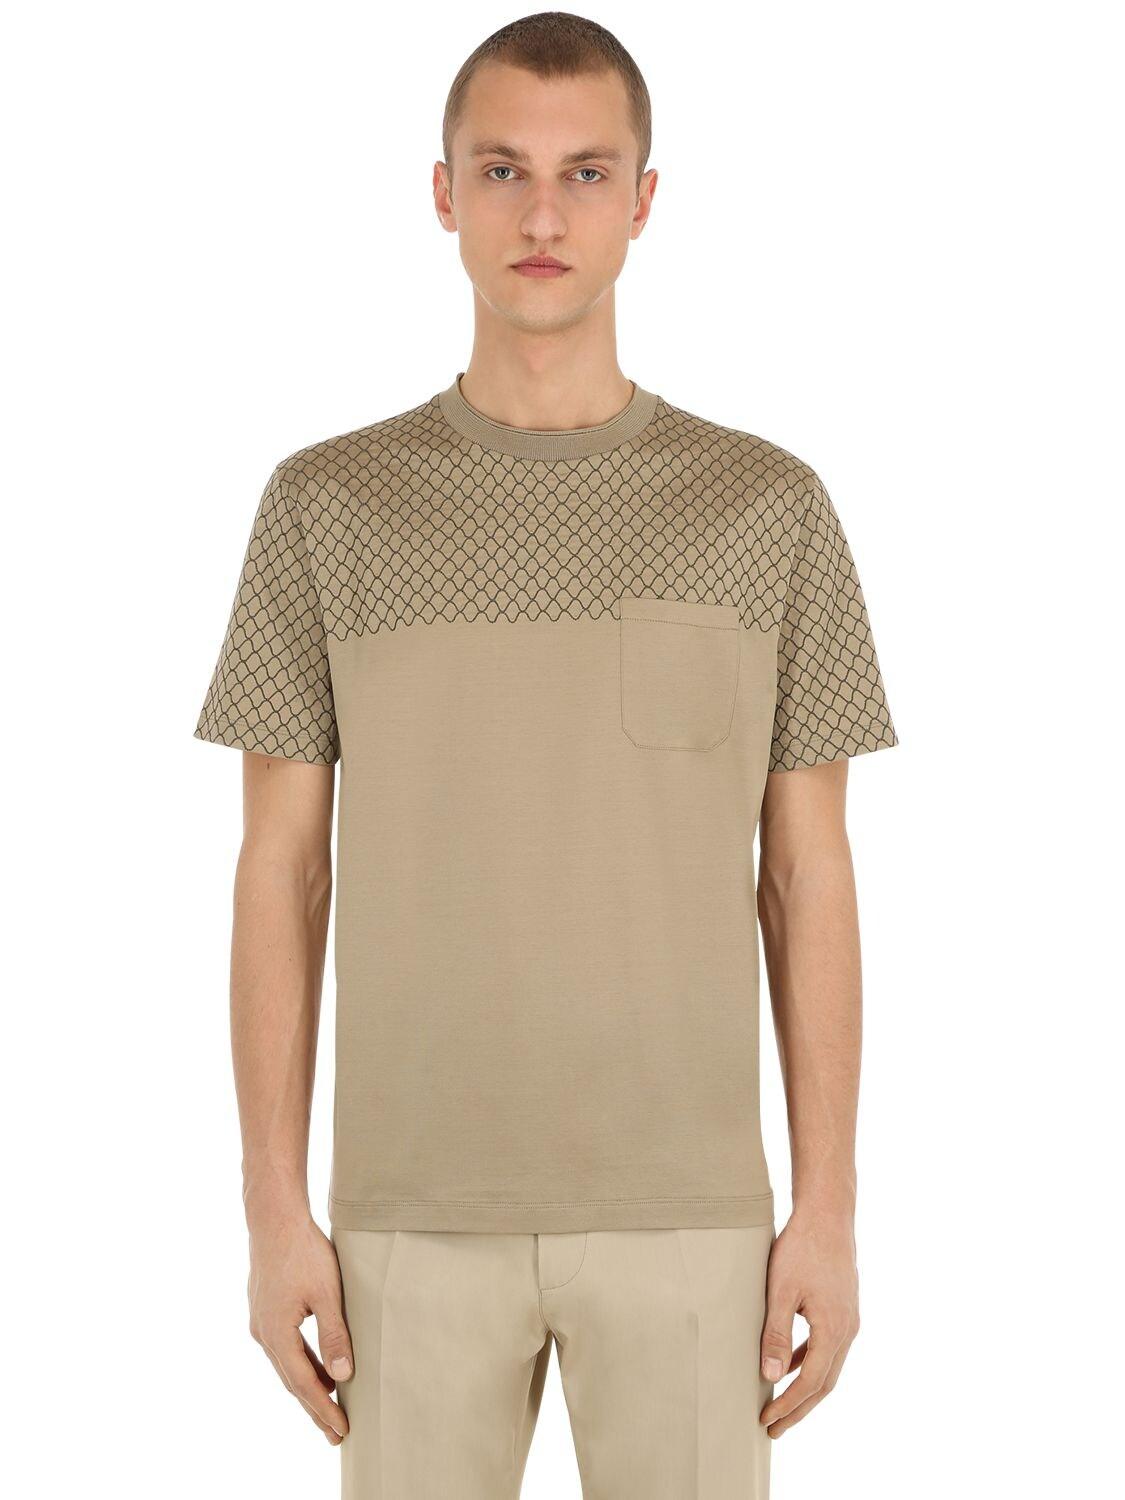 Ferragamo Crewneck Cotton Jersey T-shirt in Beige (Natural) for Men - Lyst